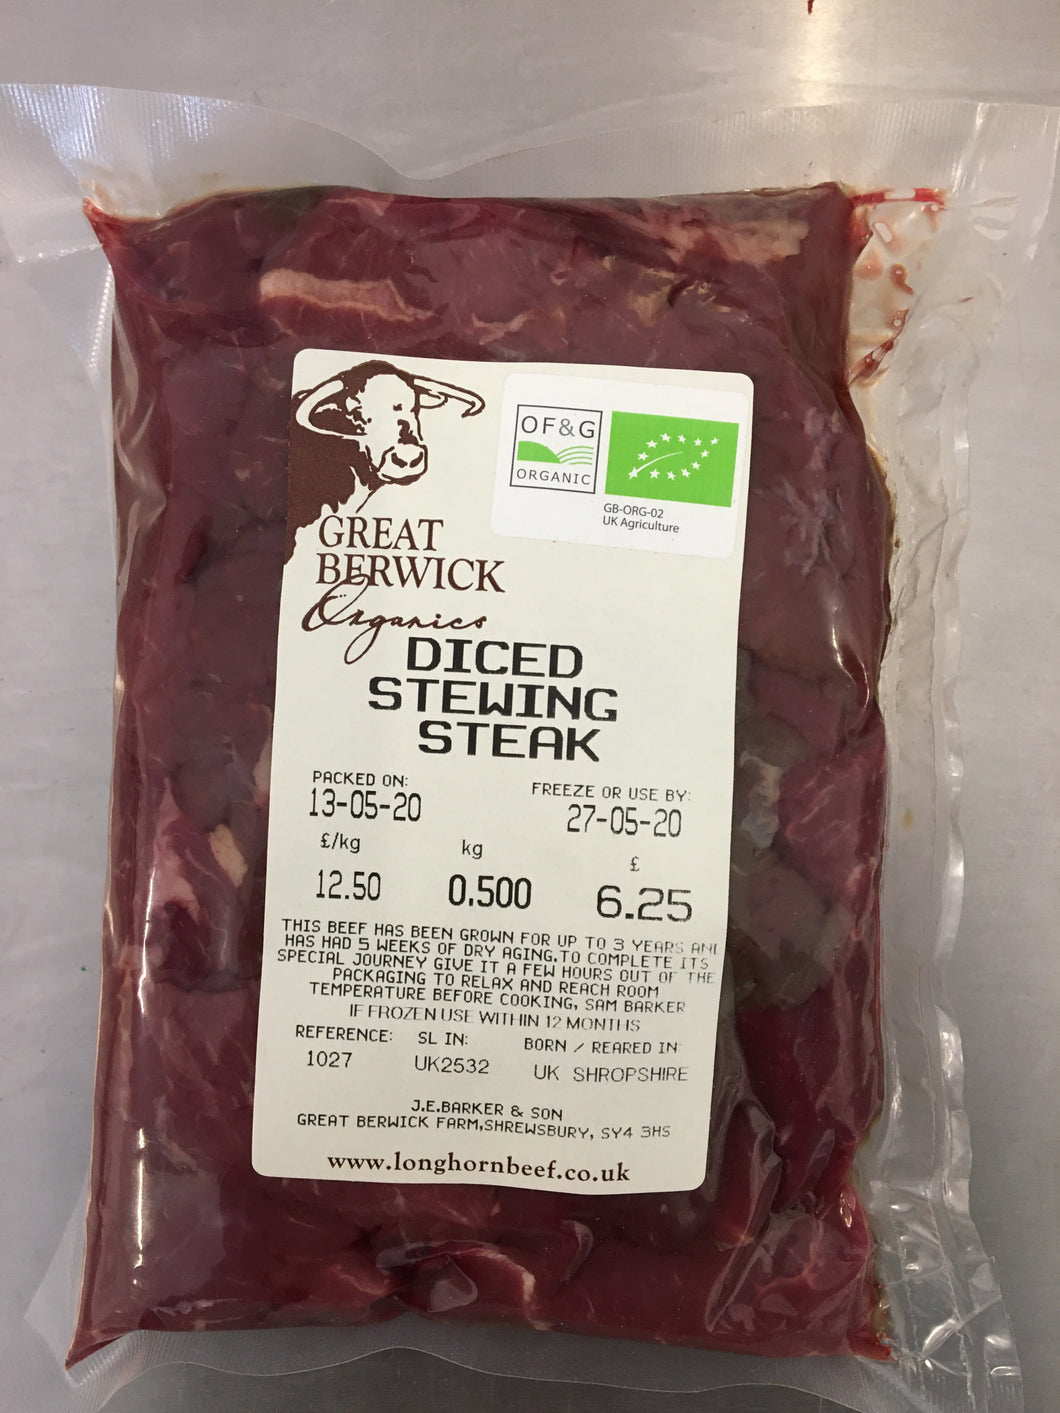 Great Berwick Organics Diced Stewing Steak